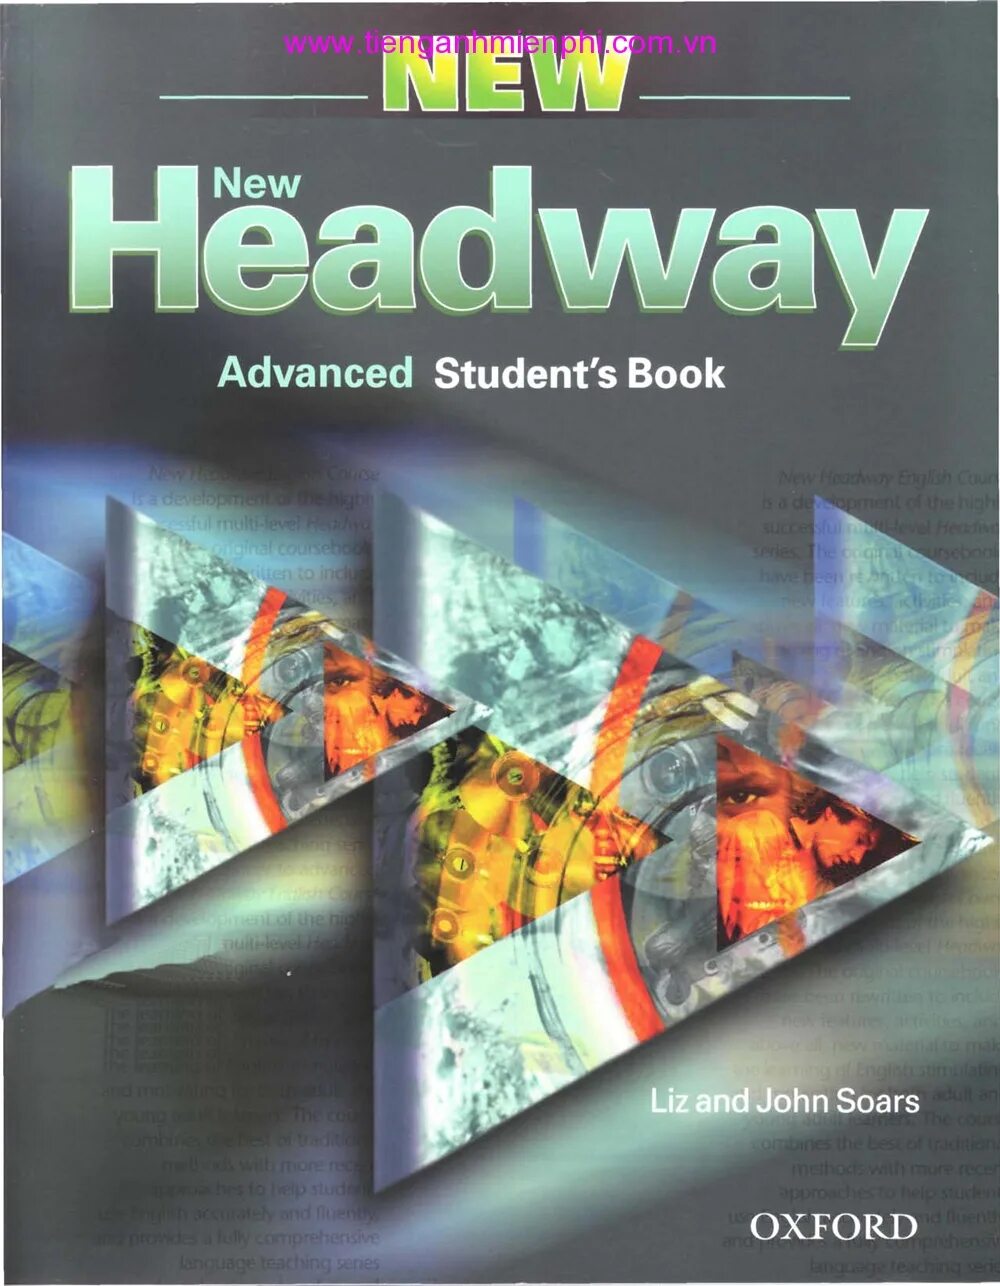 Английская книга Headway. New Headway English course student's book. Headway student's book книга. New Headway Advanced. New headway intermediate audio